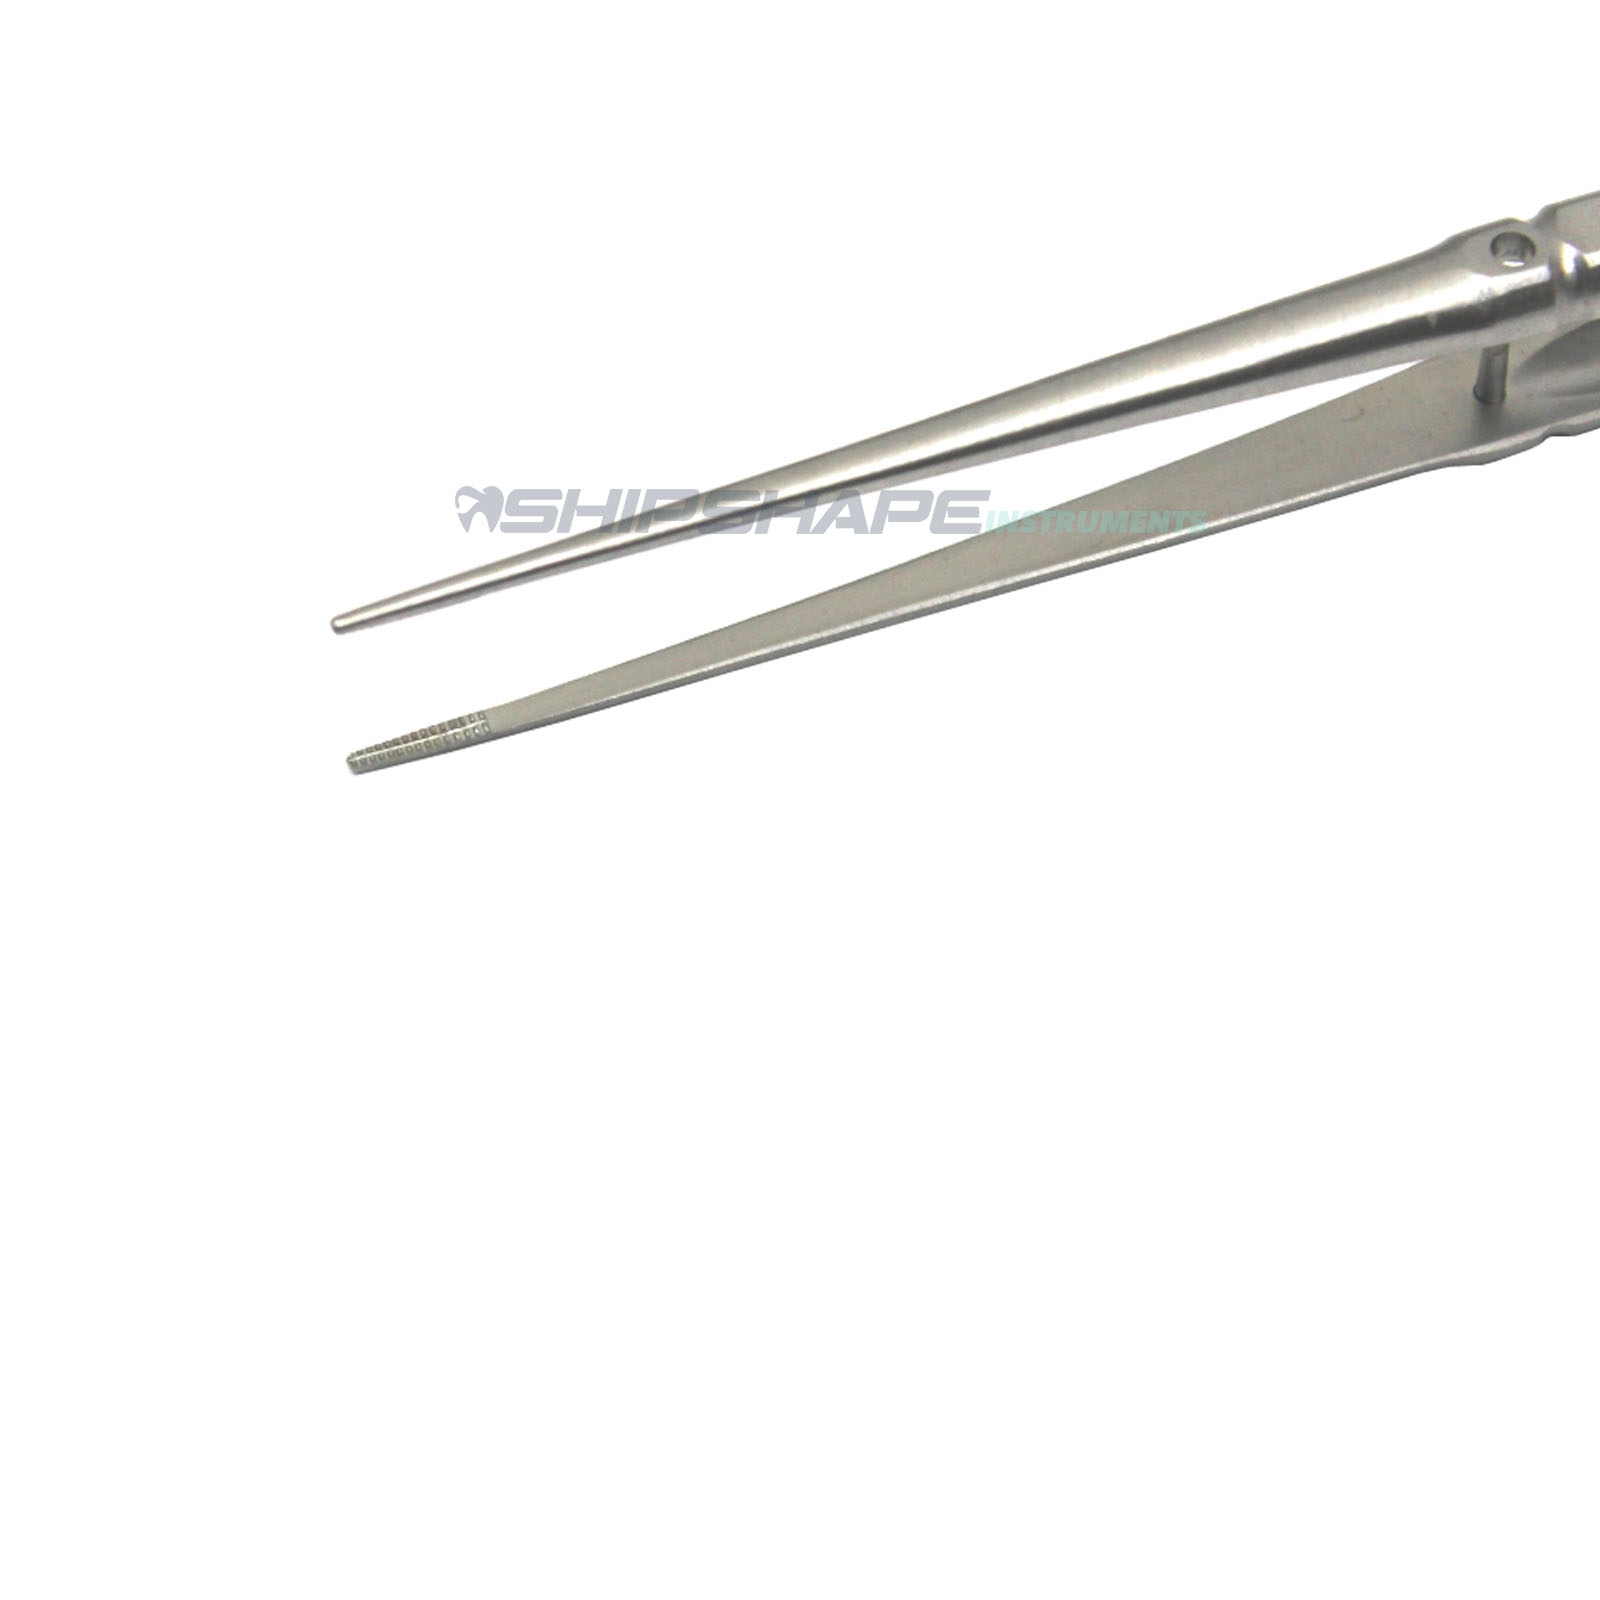 Castroviejo Needle Holder with Lock, Micro Spring Scissor, Gerald Tissue Forcep Dental Steel Instruments-1207